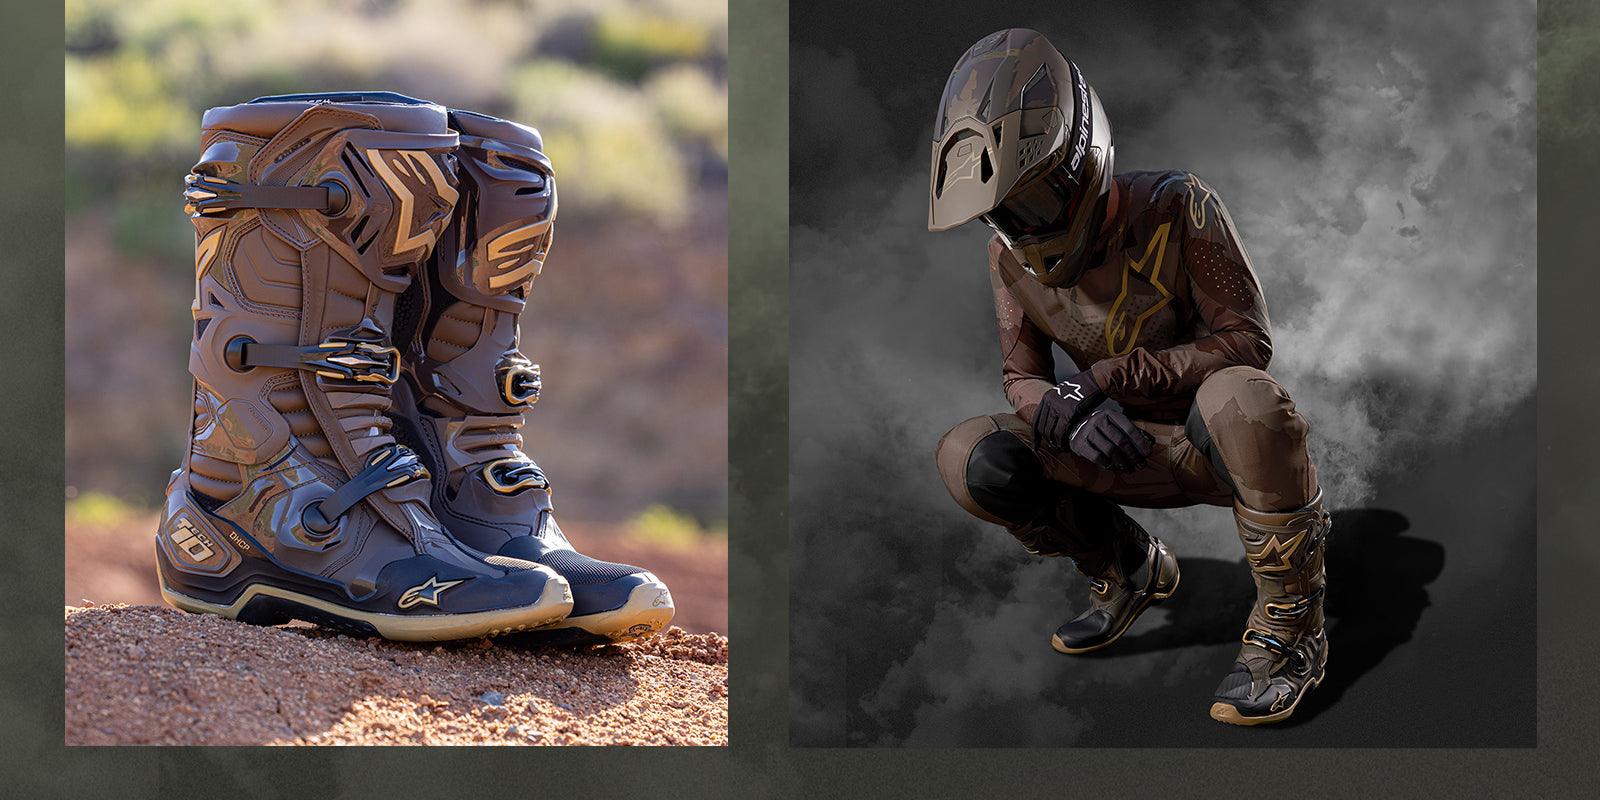 Alpinestars Tech 10 Squad Boots - Limited Edition 23